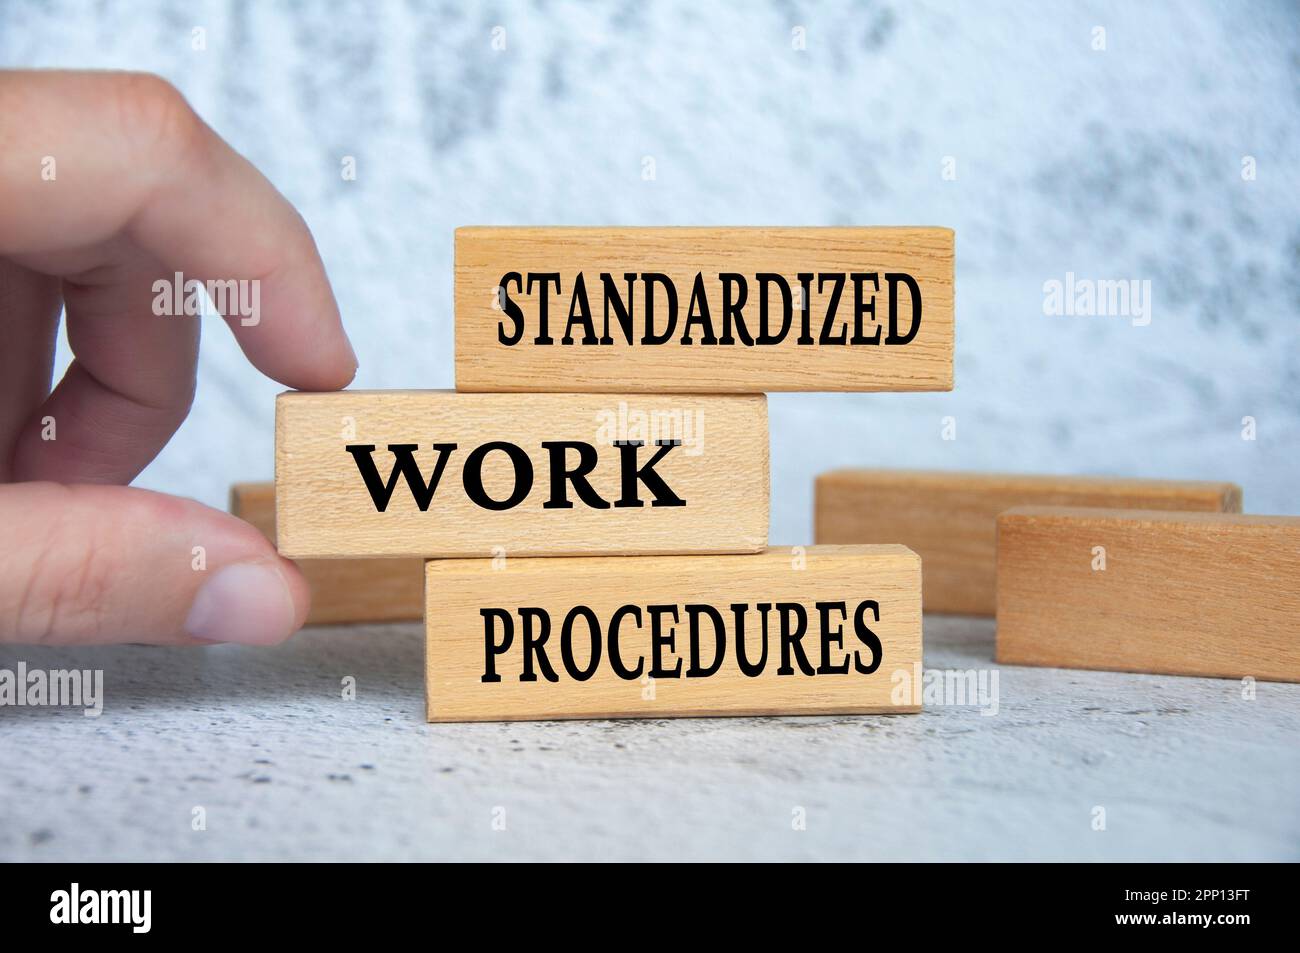 Standard work procedures text on wooden blocks. Business concept. Stock Photo